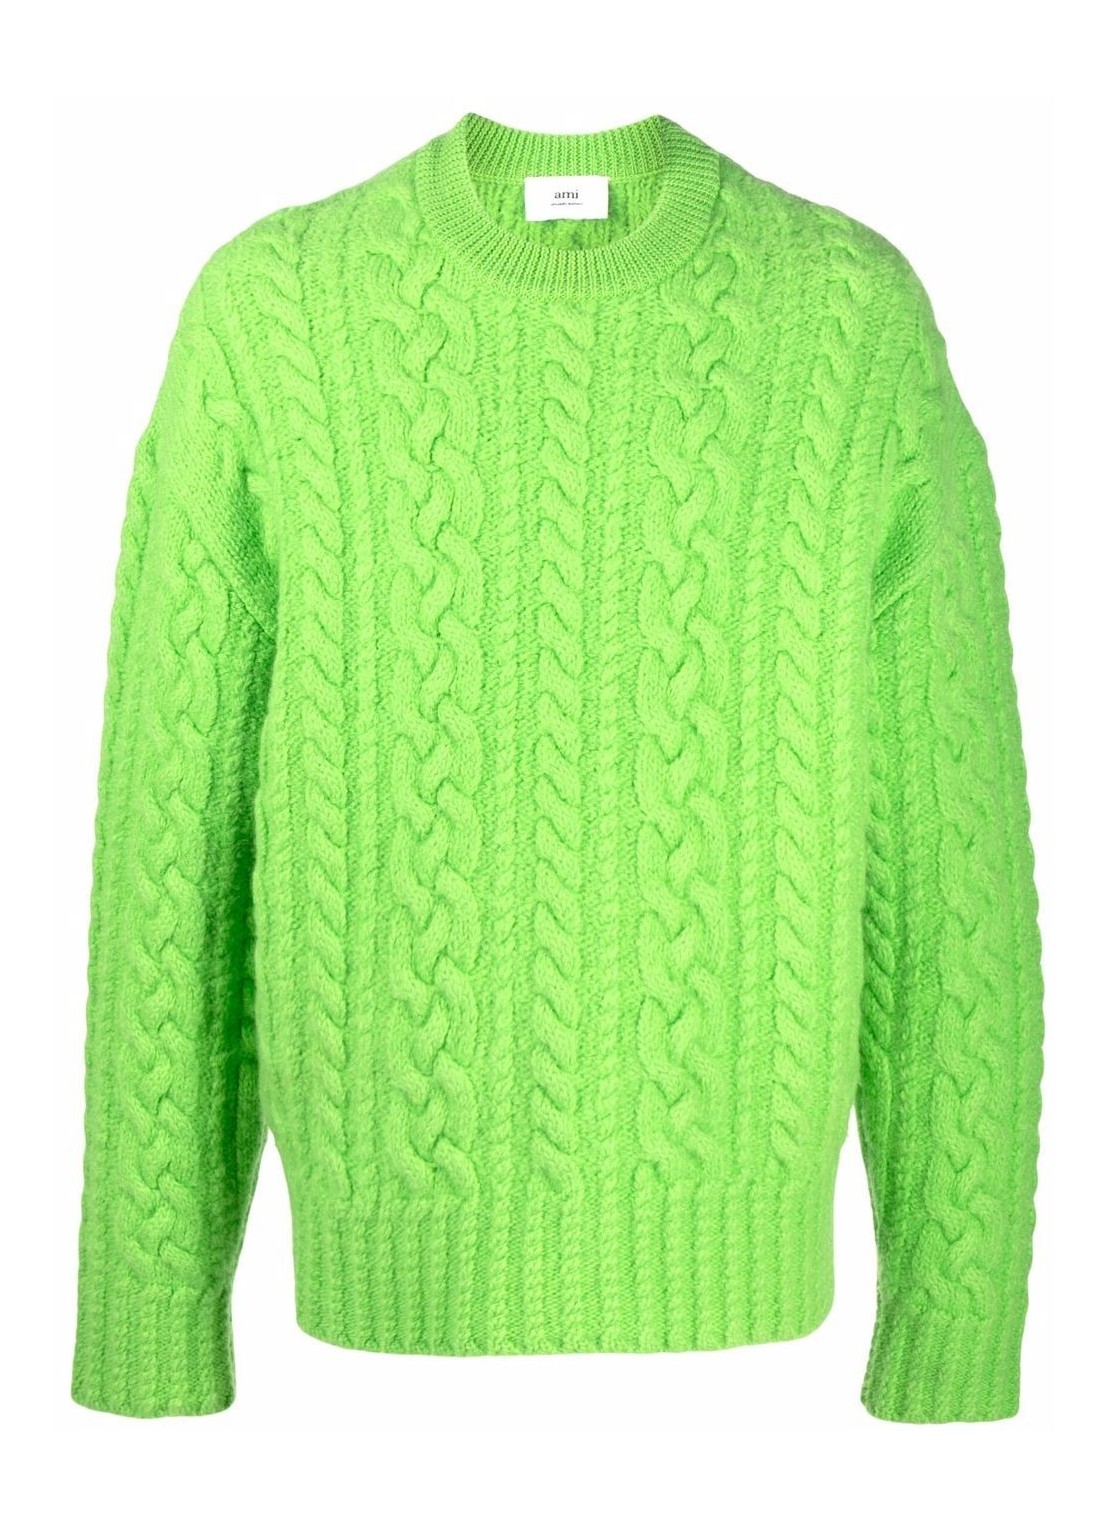 Punto ami knitwear man cable knit sweater hks011017 300 talla M
 